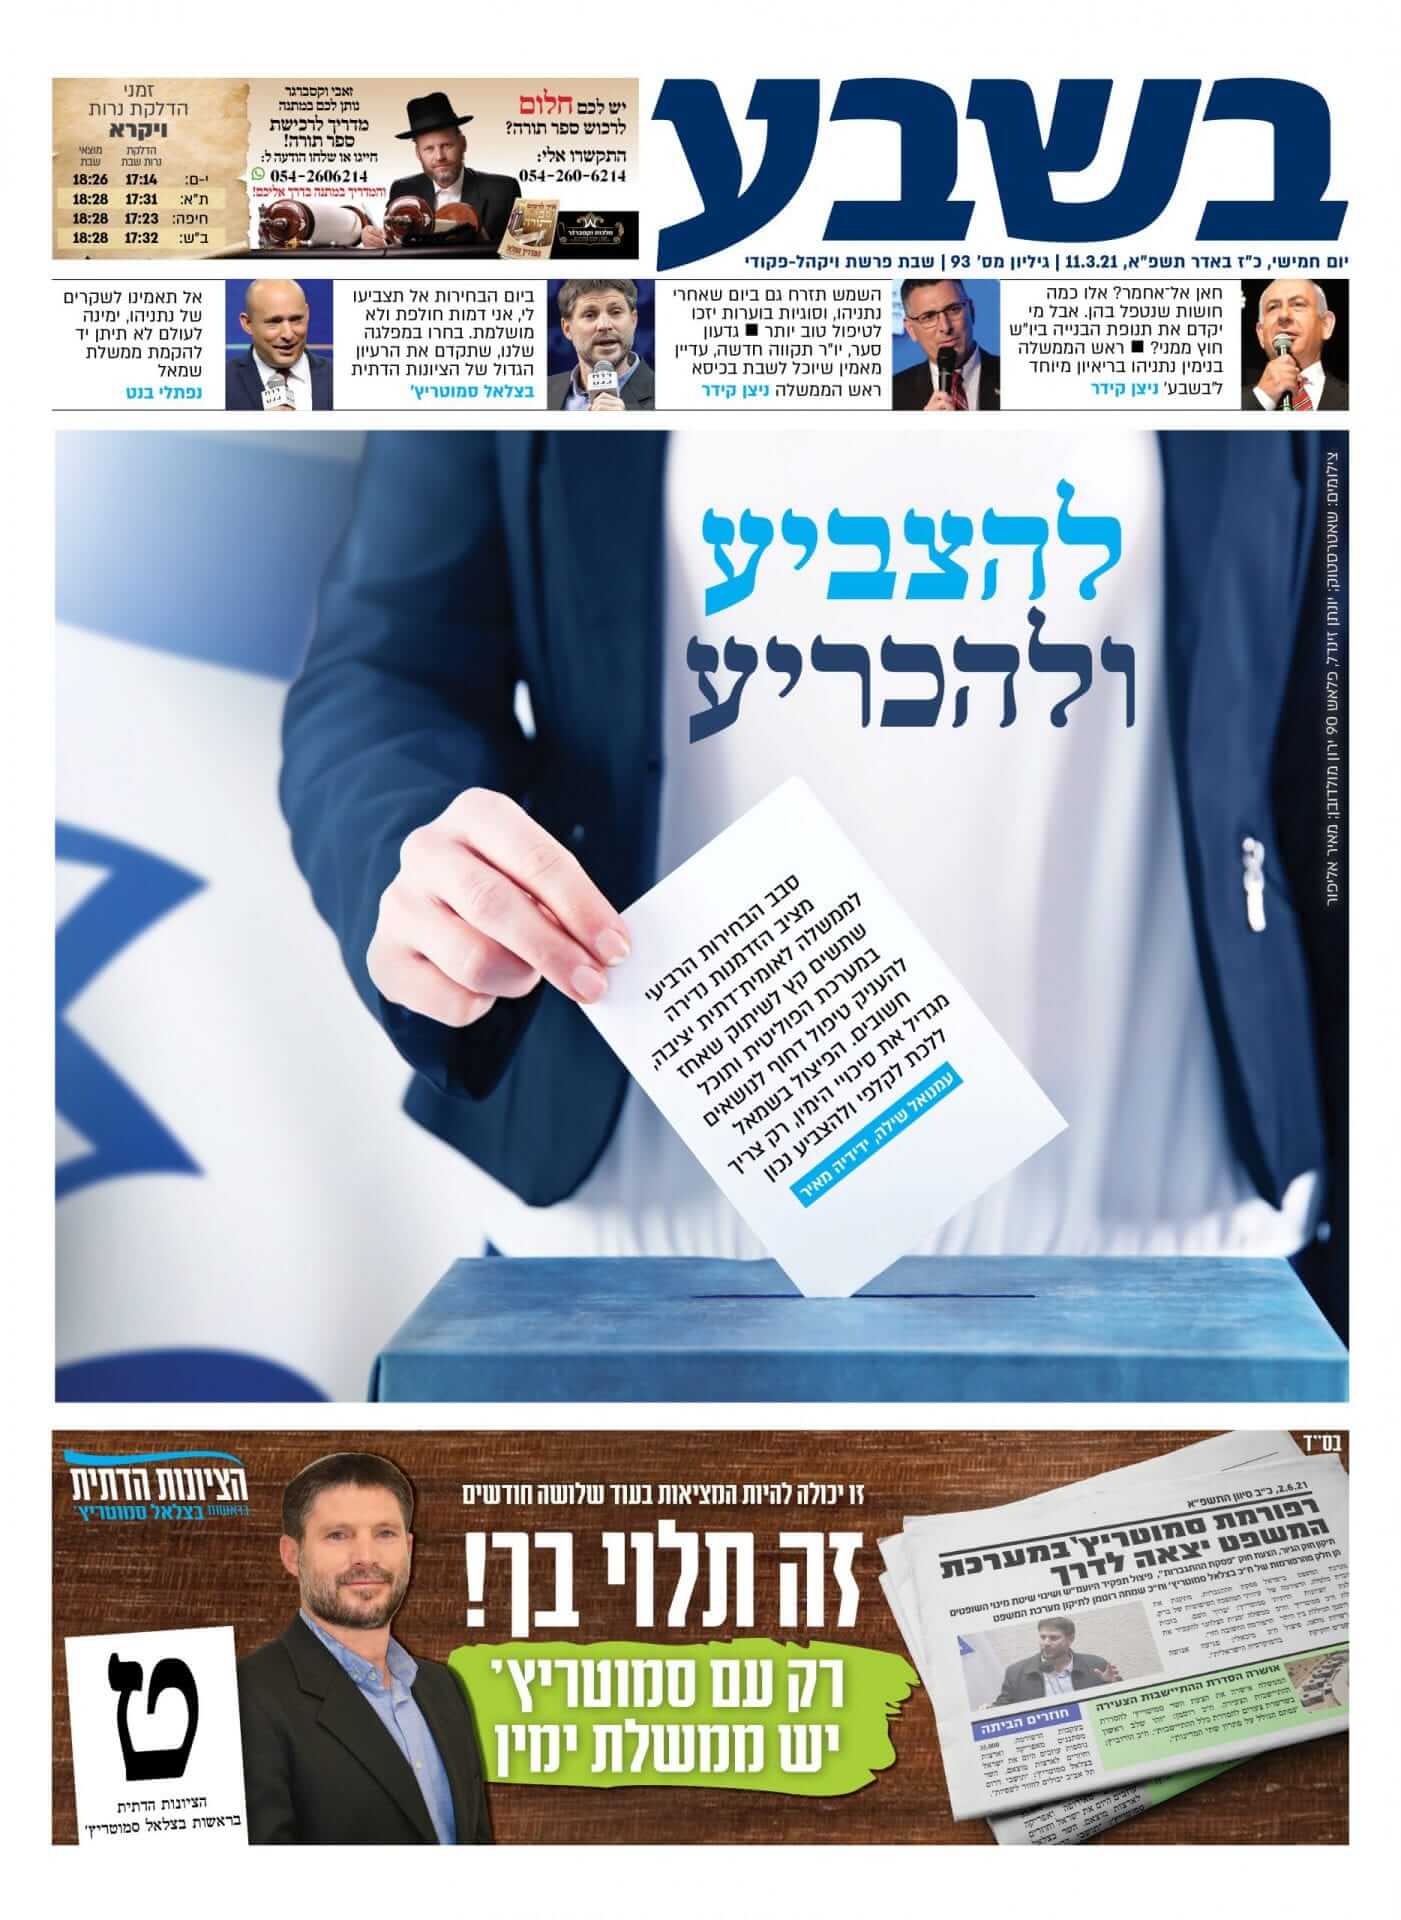 Israel Newspapers 18 B Sheva